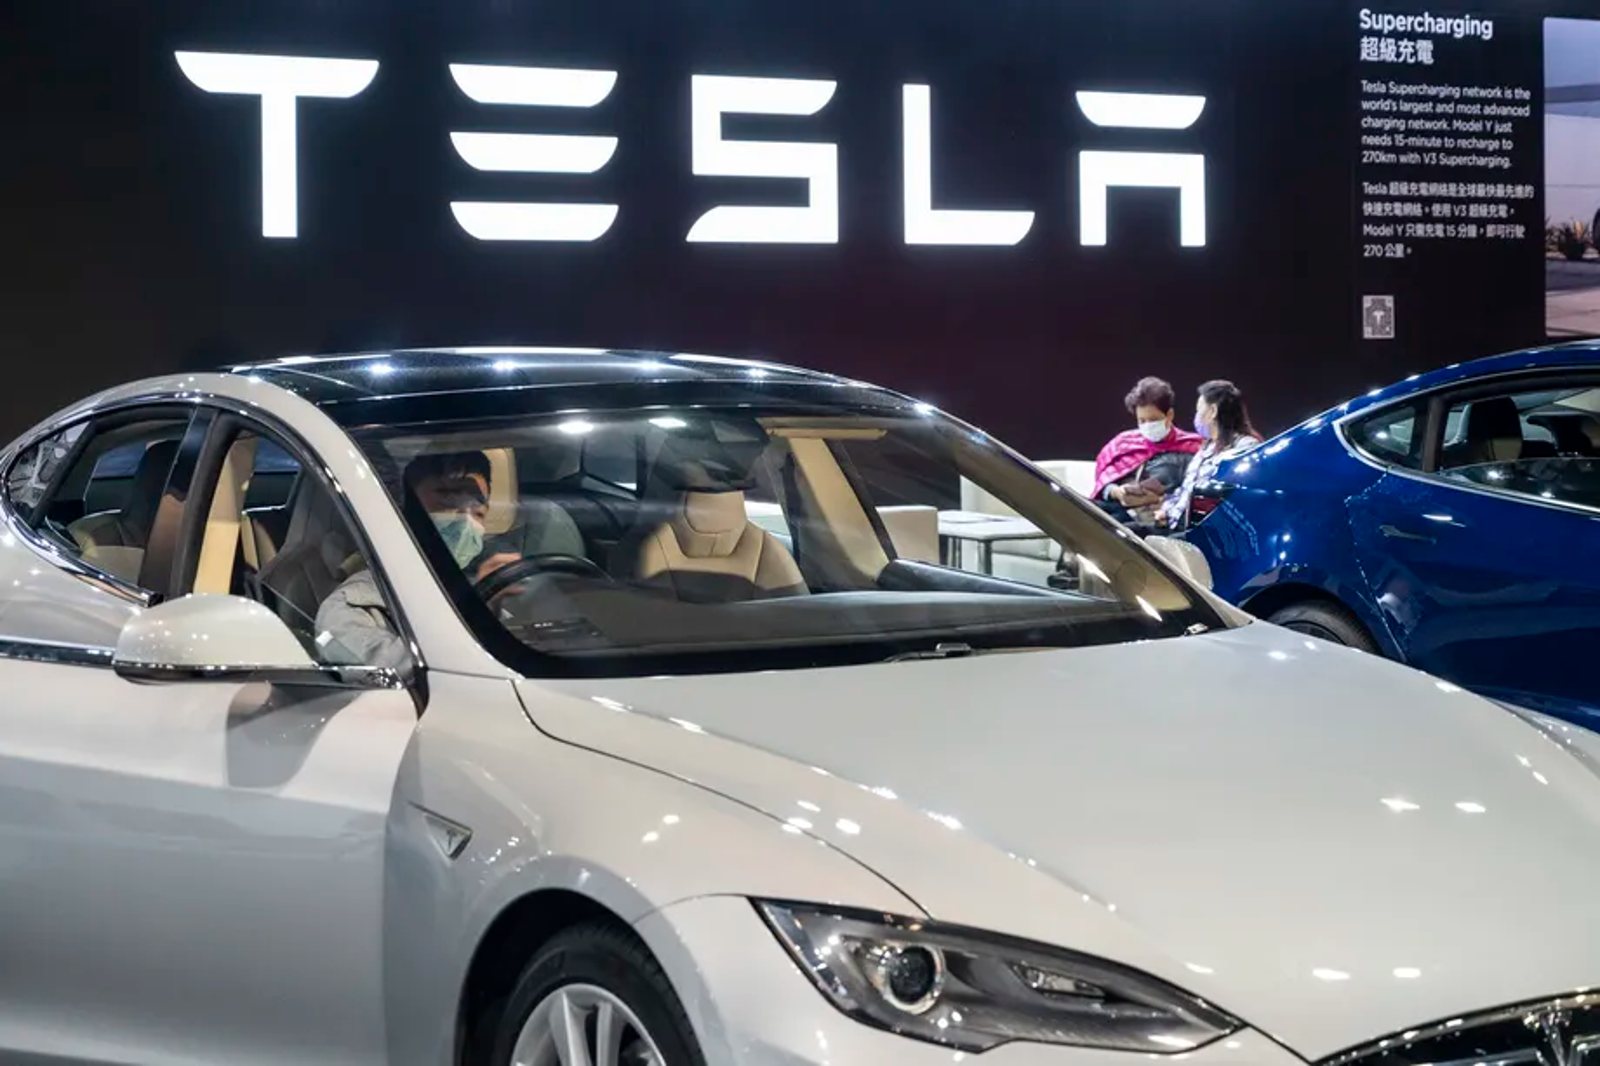 H Tesla ανακαλεί 40.000 οχήματα – Το πιθανό πρόβλημα